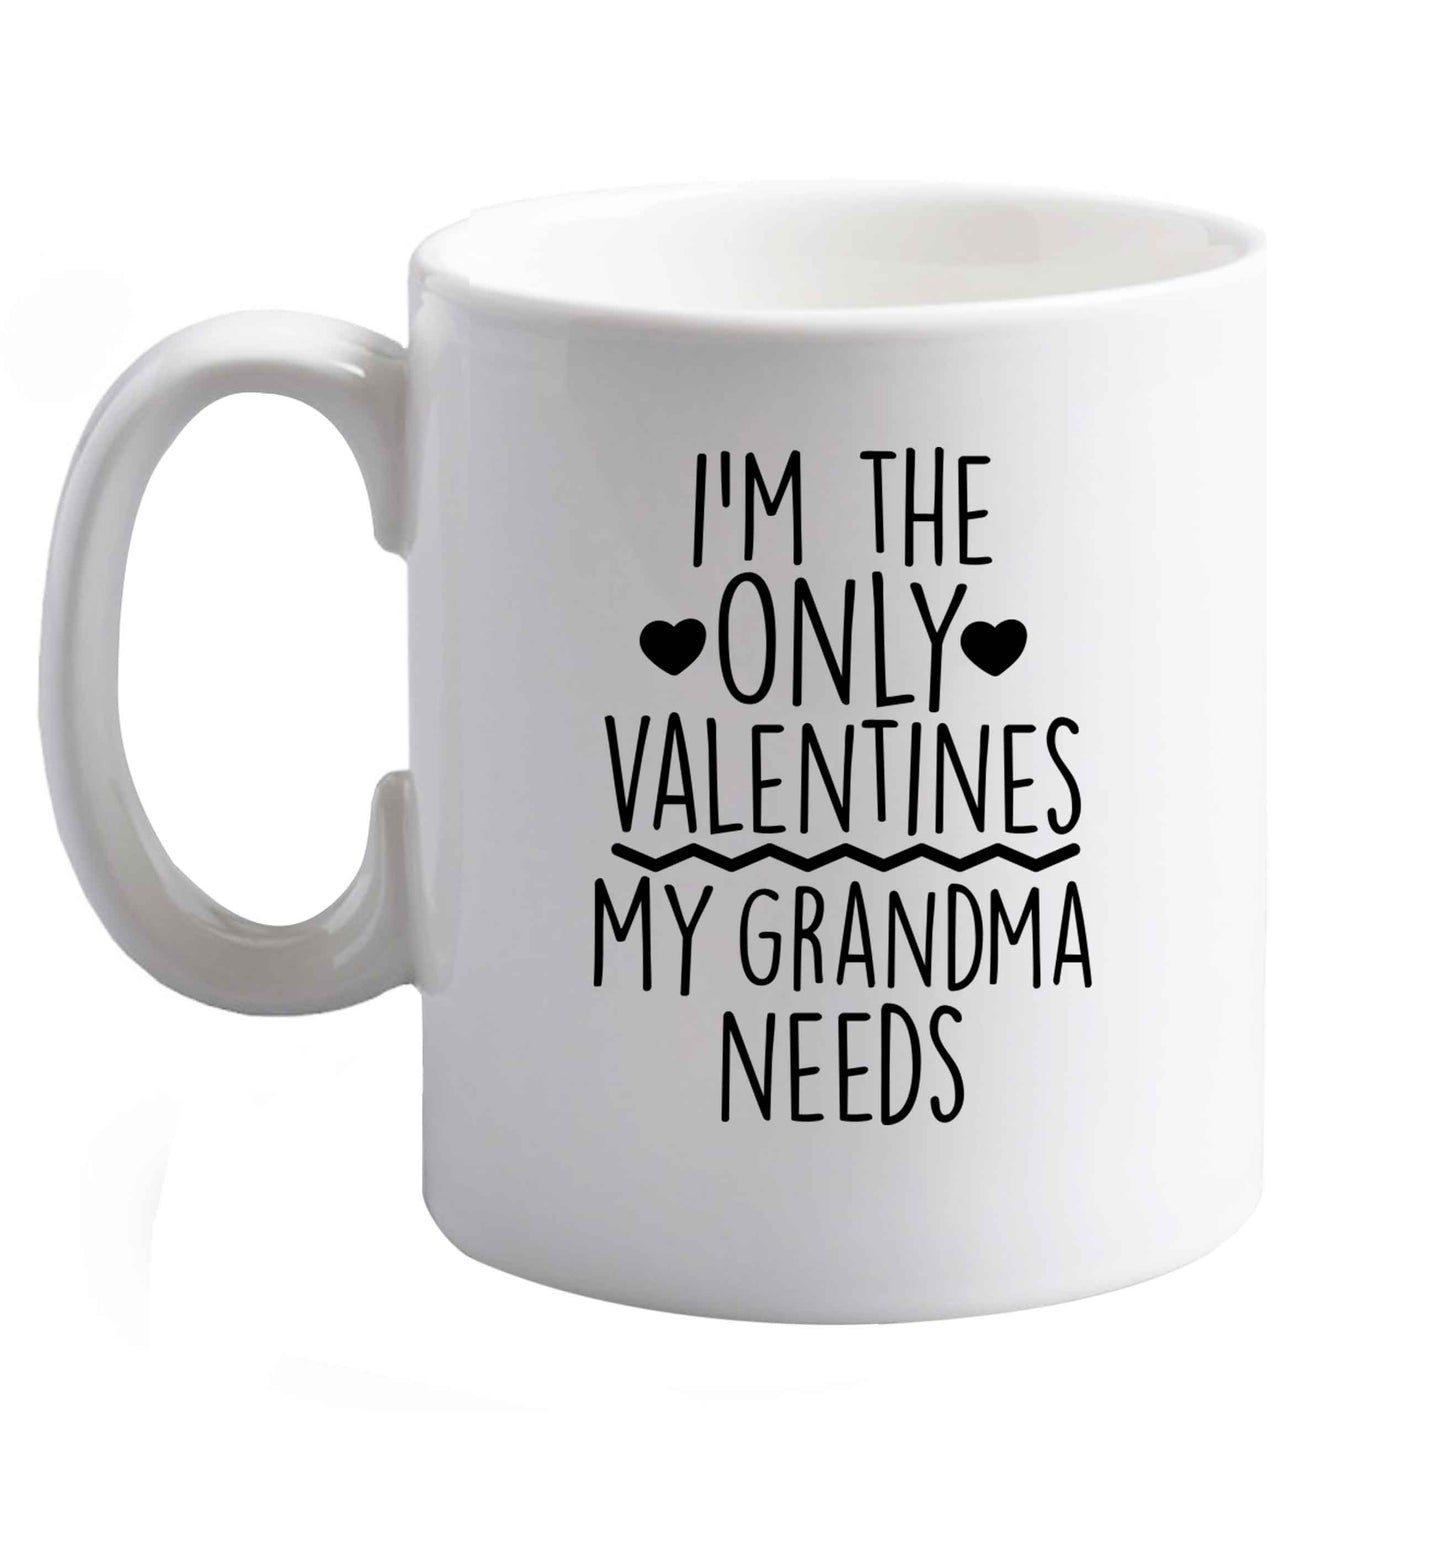 10 oz I'm the only valentines my grandma needs ceramic mug right handed